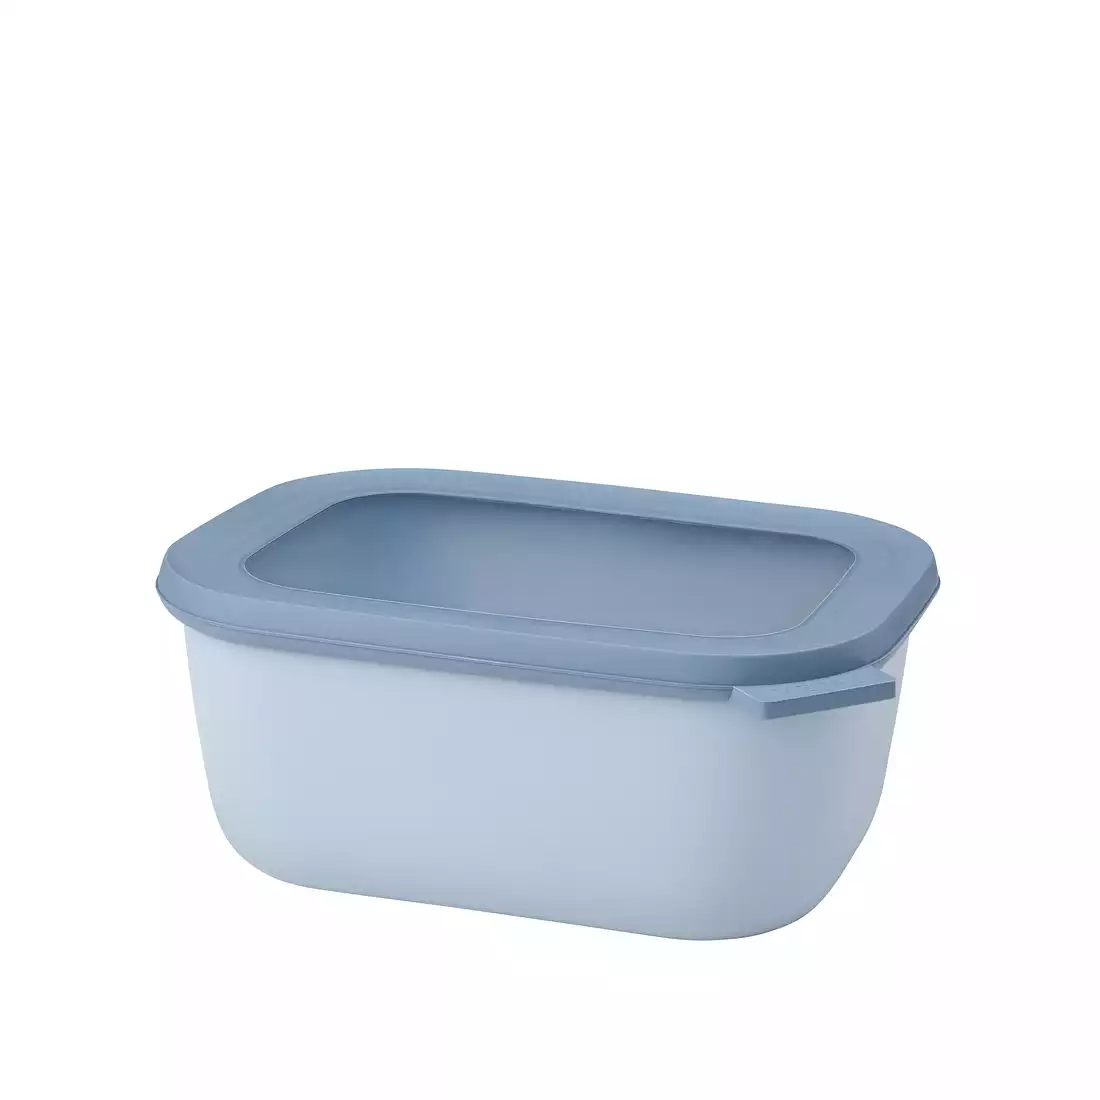 MEPAL CIRQULA rectangular bowl 1500 ml, nordic blue